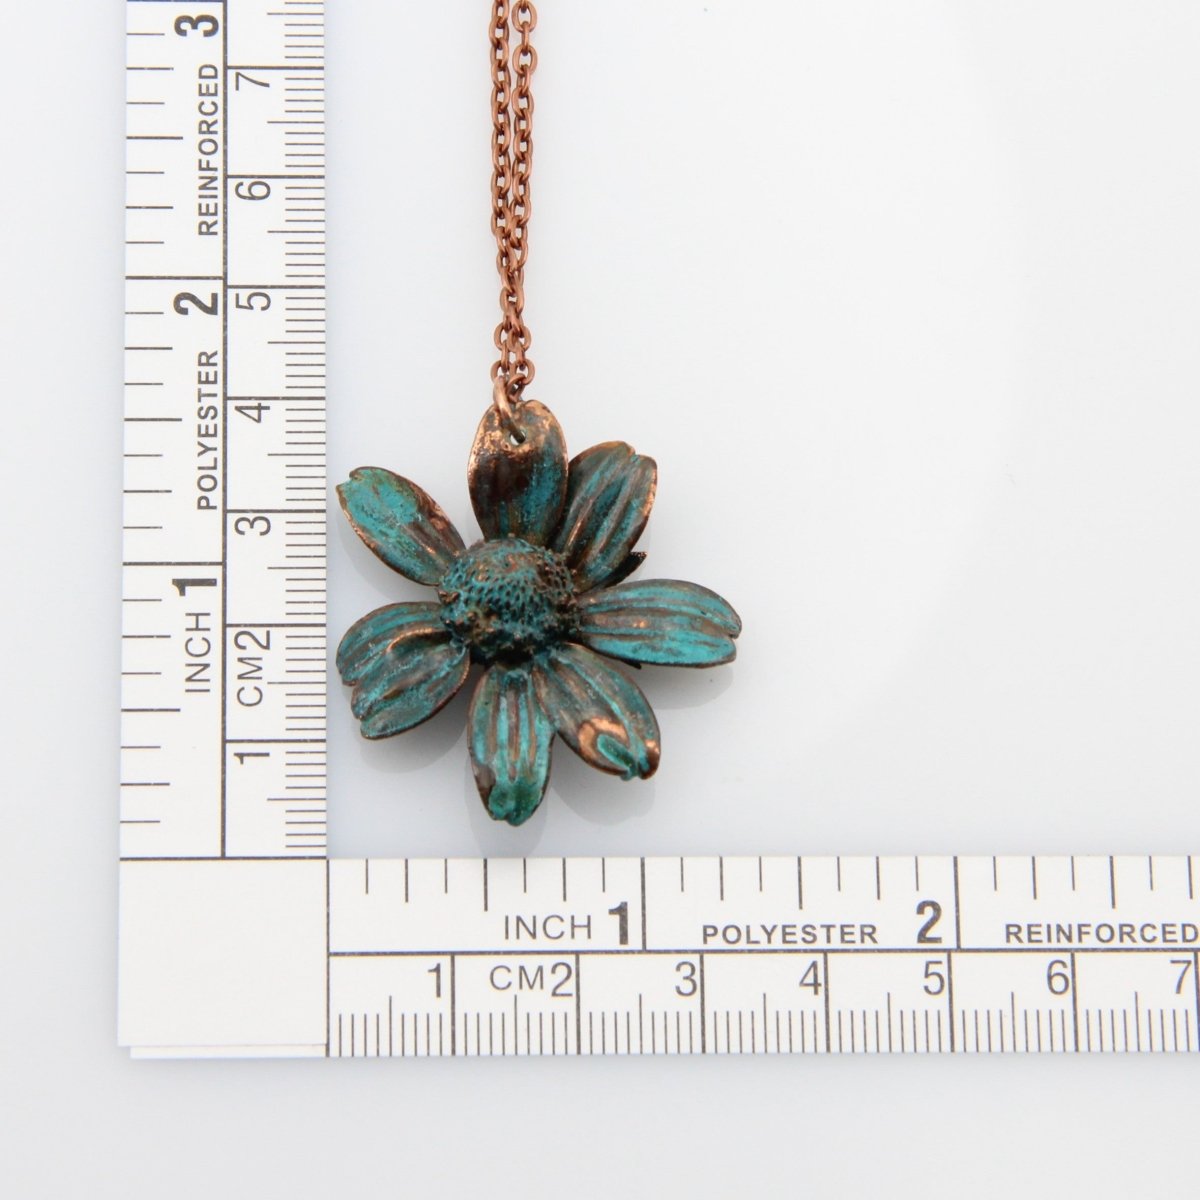 Copper Electroformed Plant Pendant - Real Brown-Eyed Susan Flower